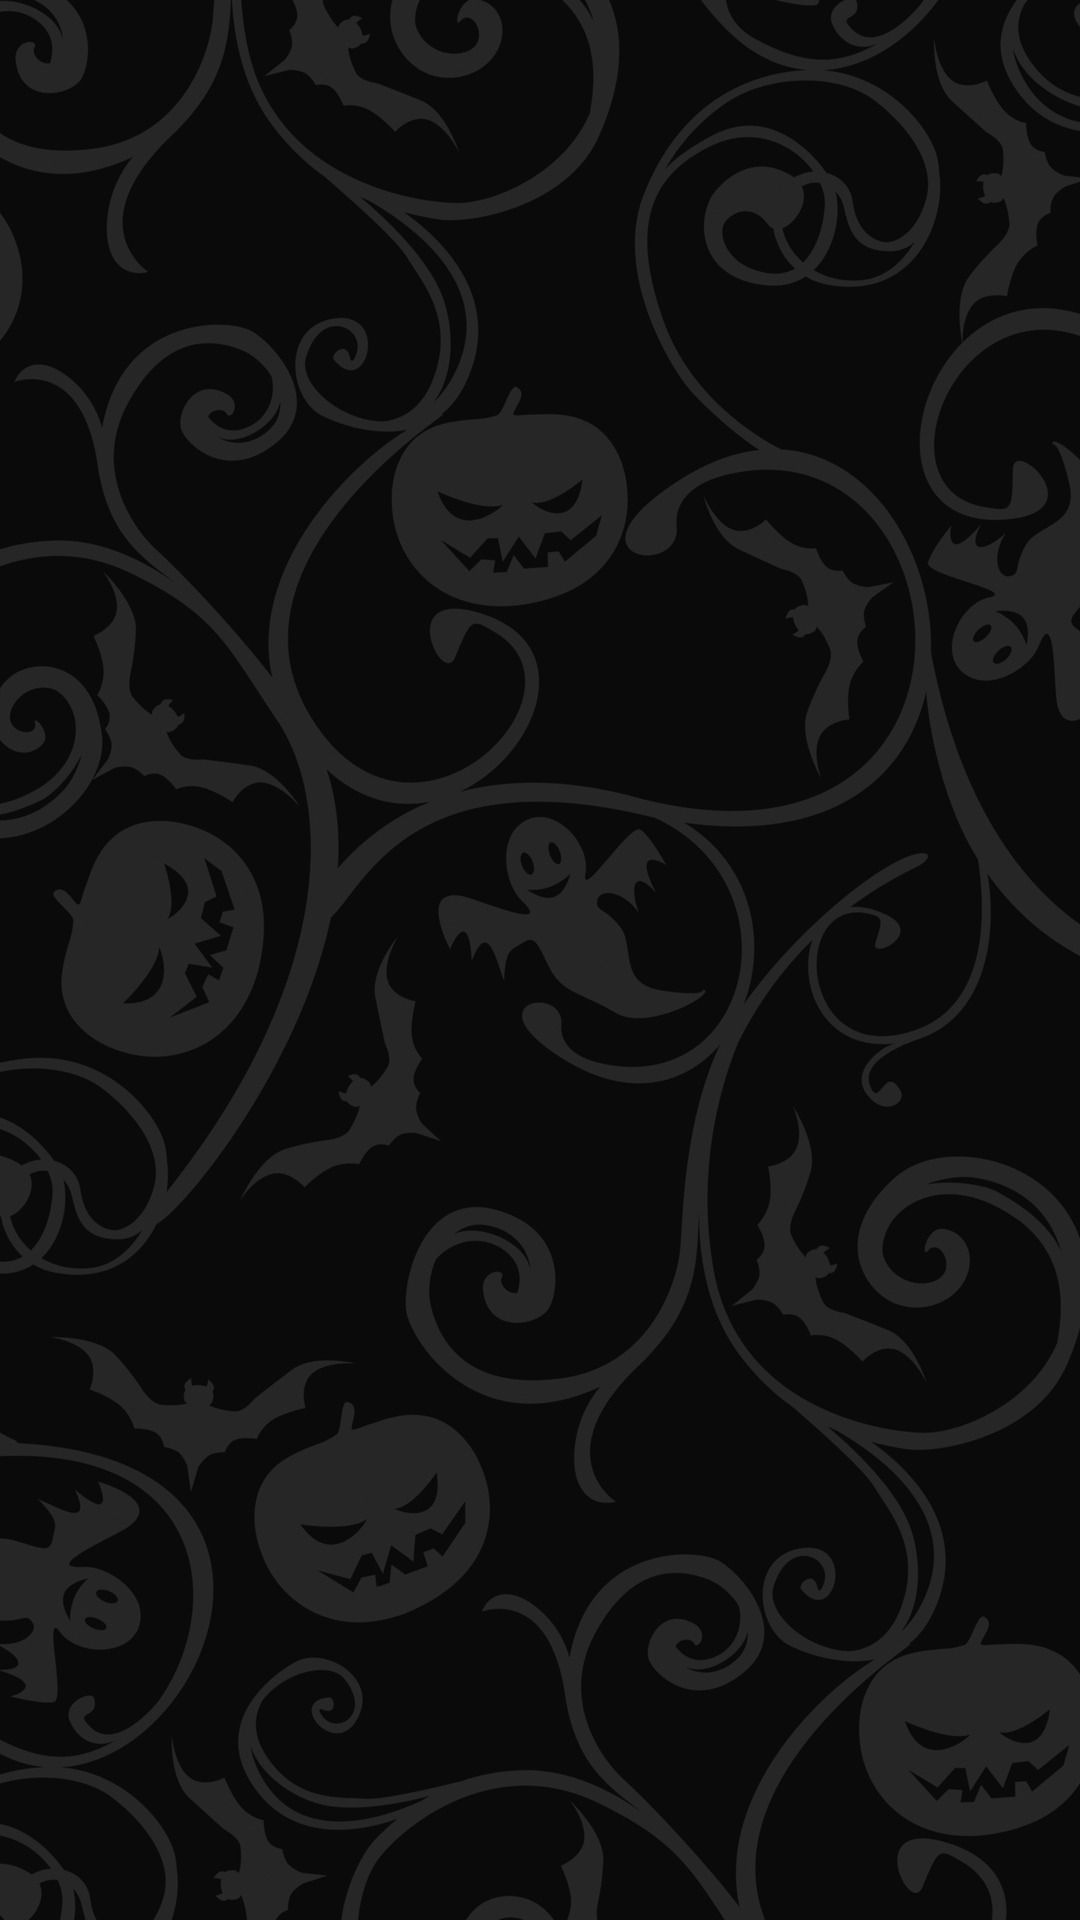 Dark Halloween pattern Mobile Wallpaper 20283